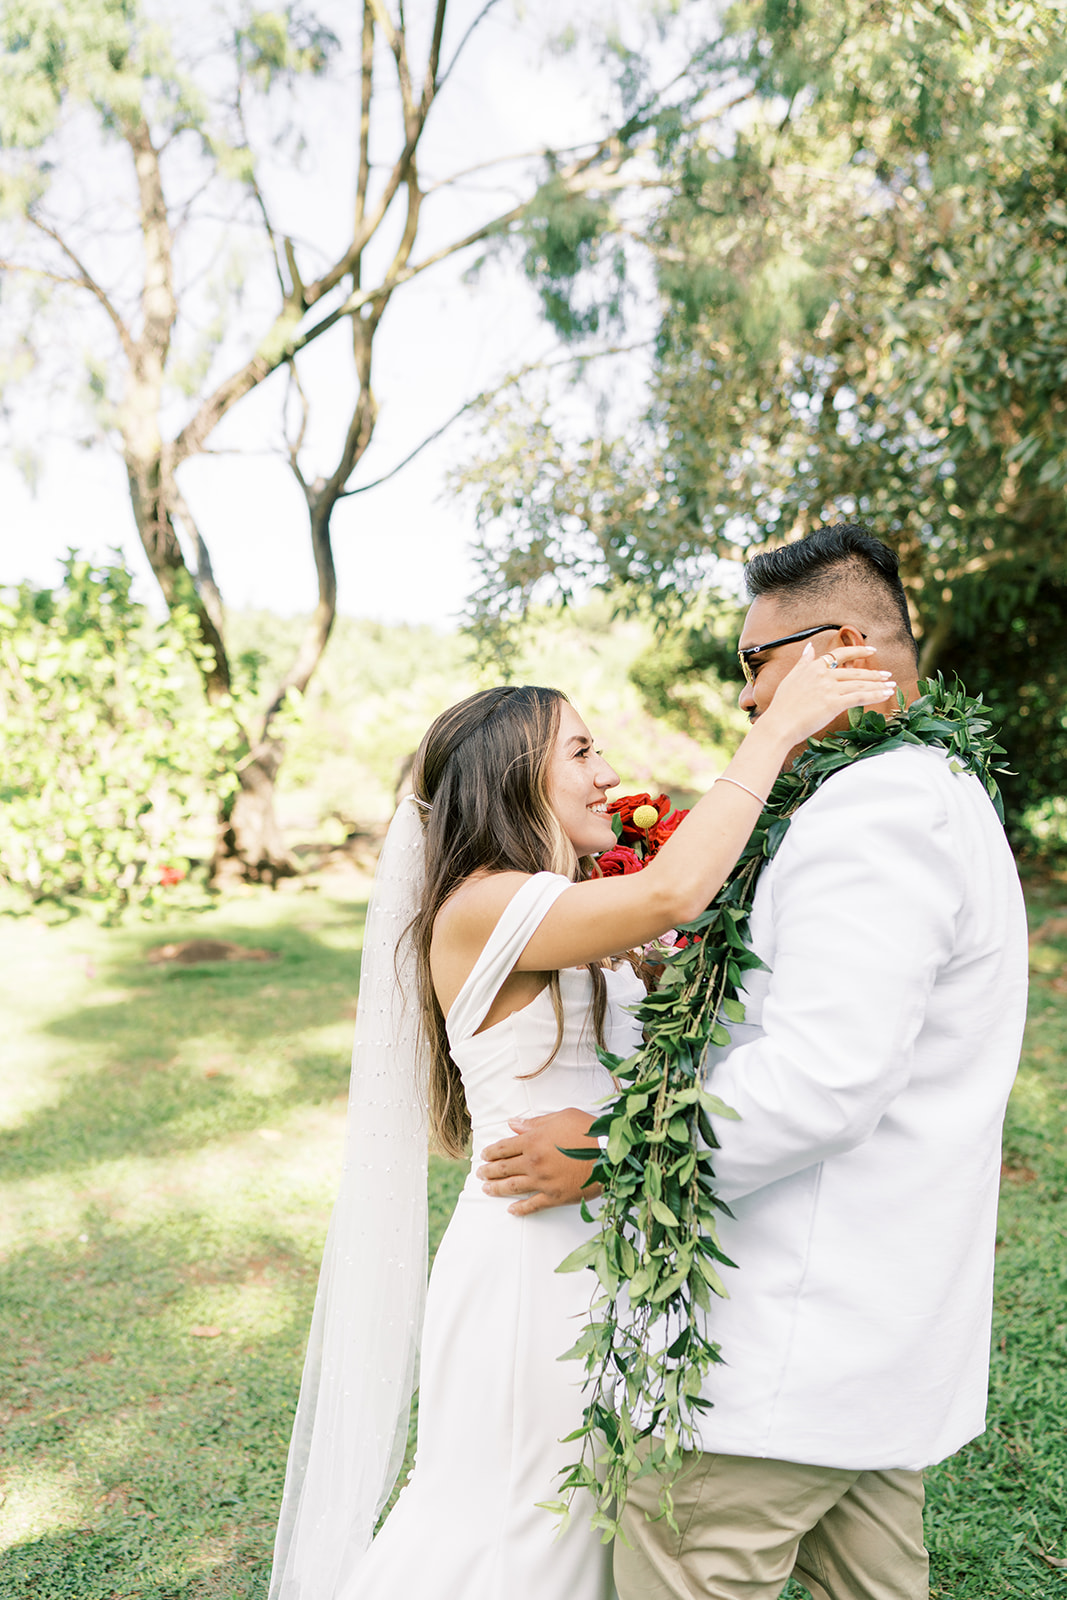 A couple in wedding attire sharing a joyful moment outdoors Smiths Tropical Paradise in Kauai